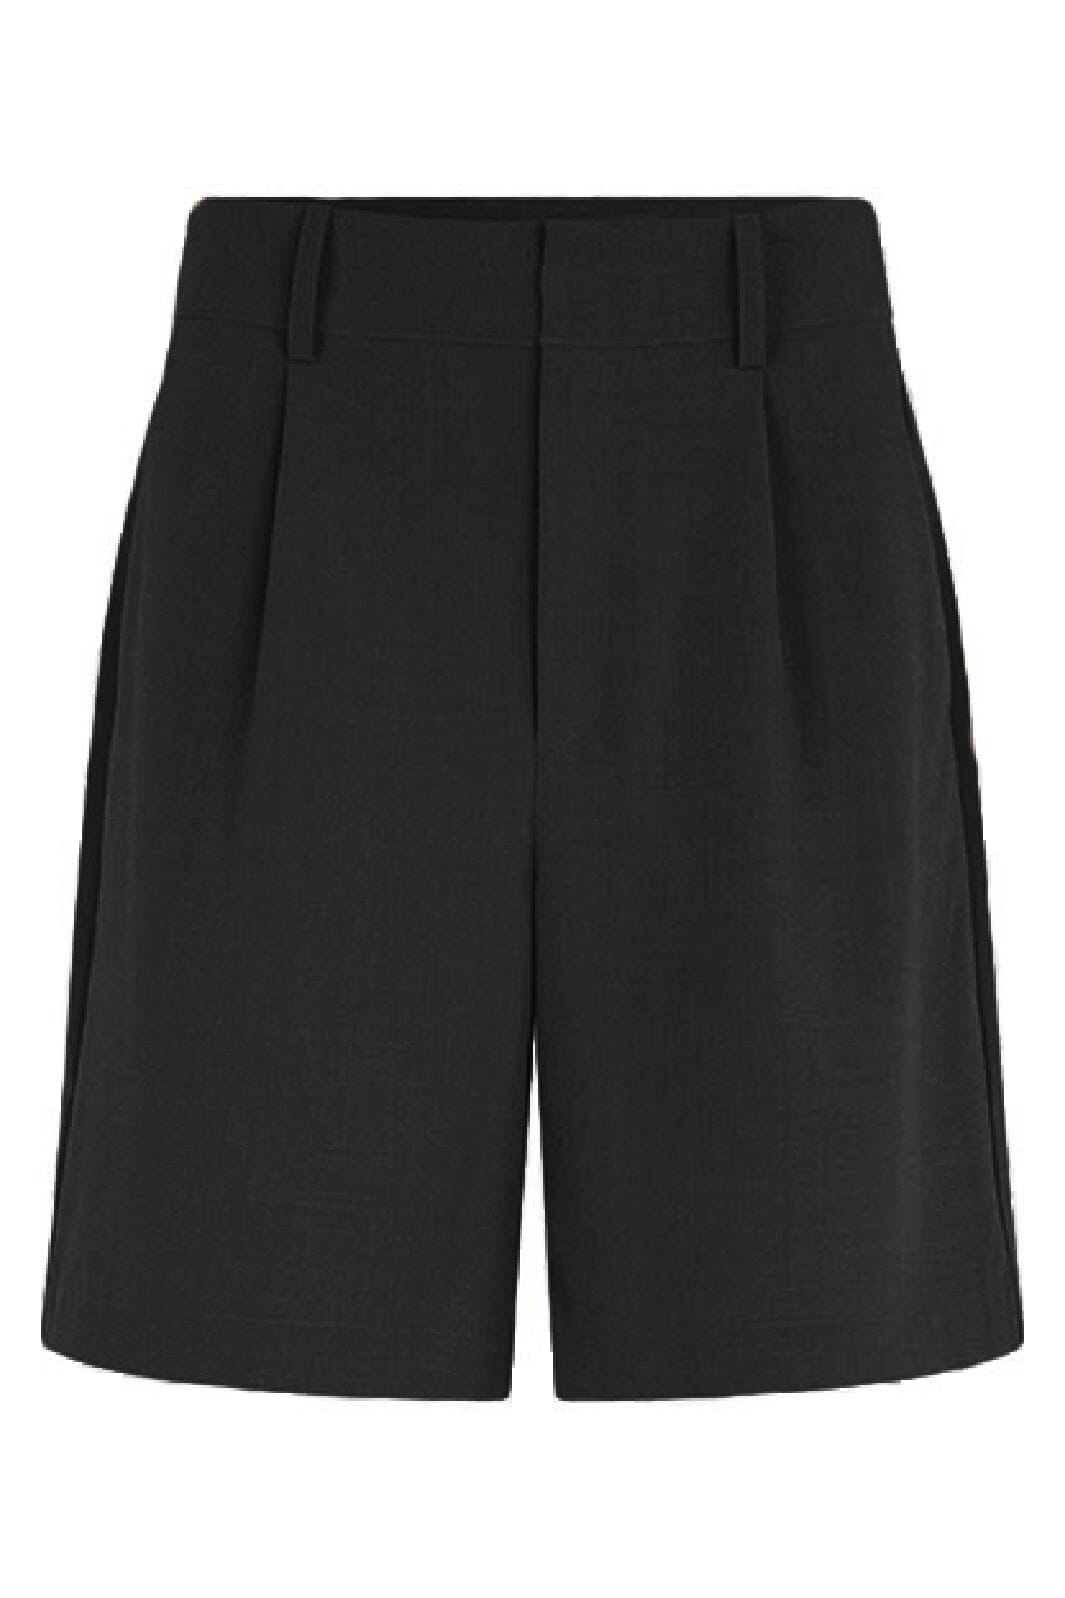 MbyM - Guri-M - 880 Black Shorts 